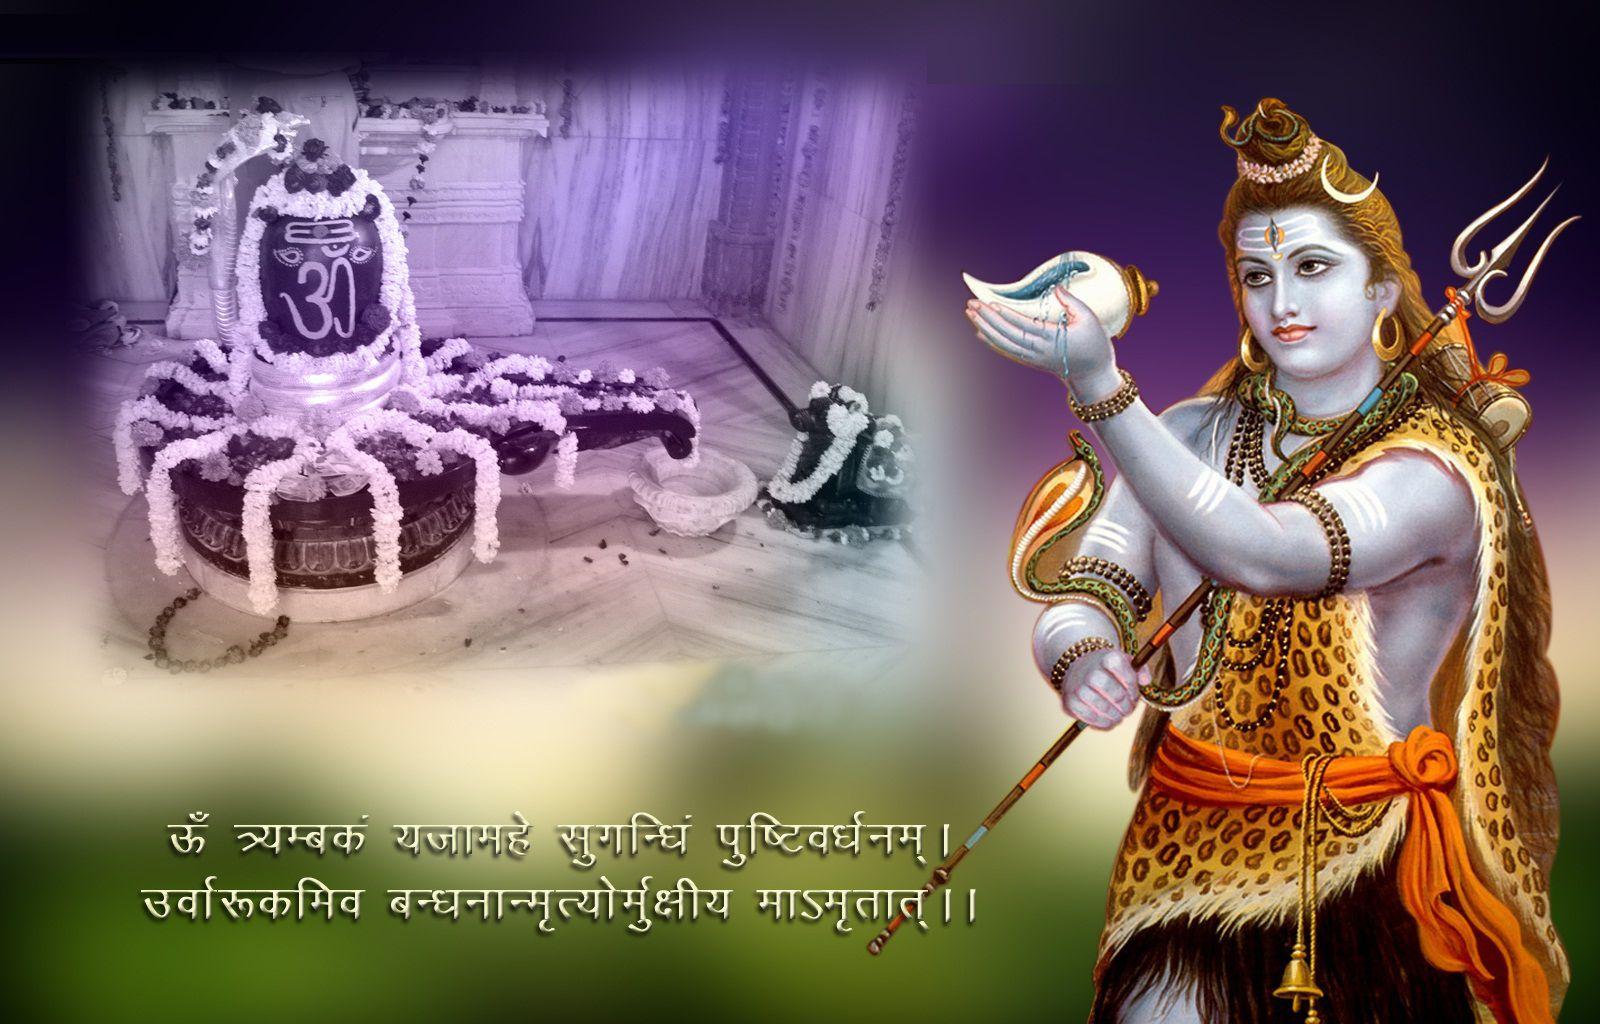 Day of Shiva